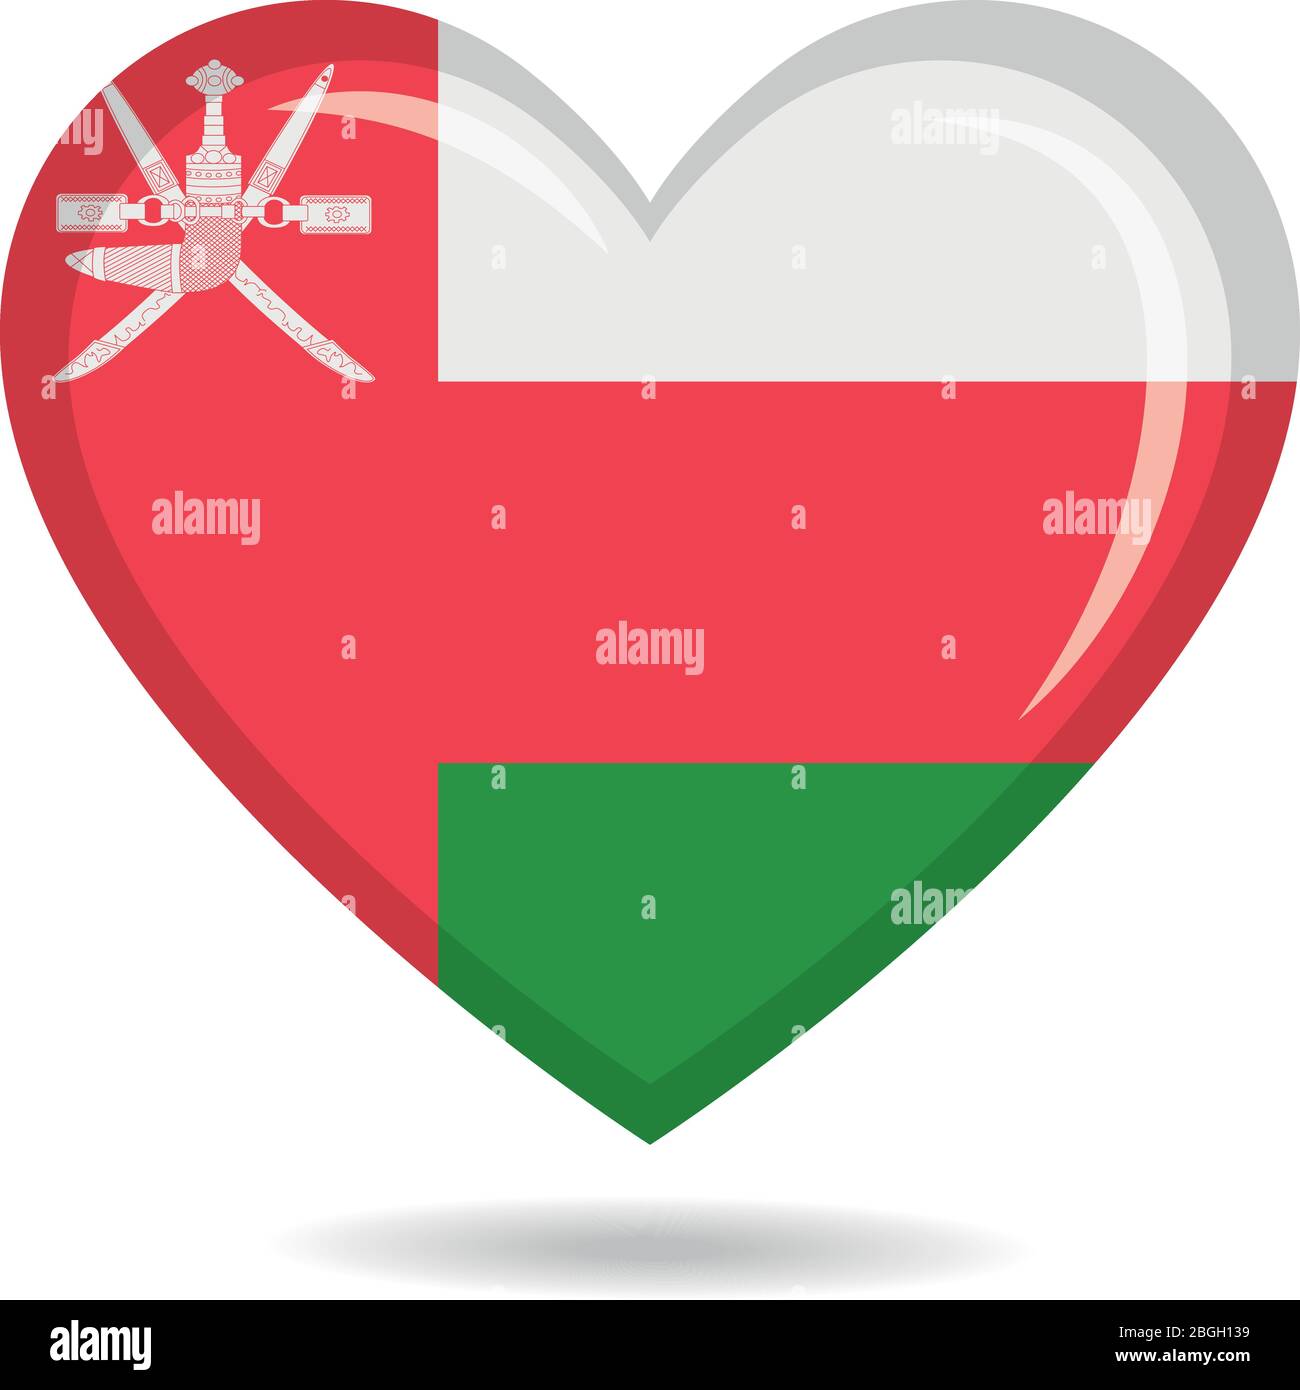 Oman national flag in heart shape vector illustration Stock Vector